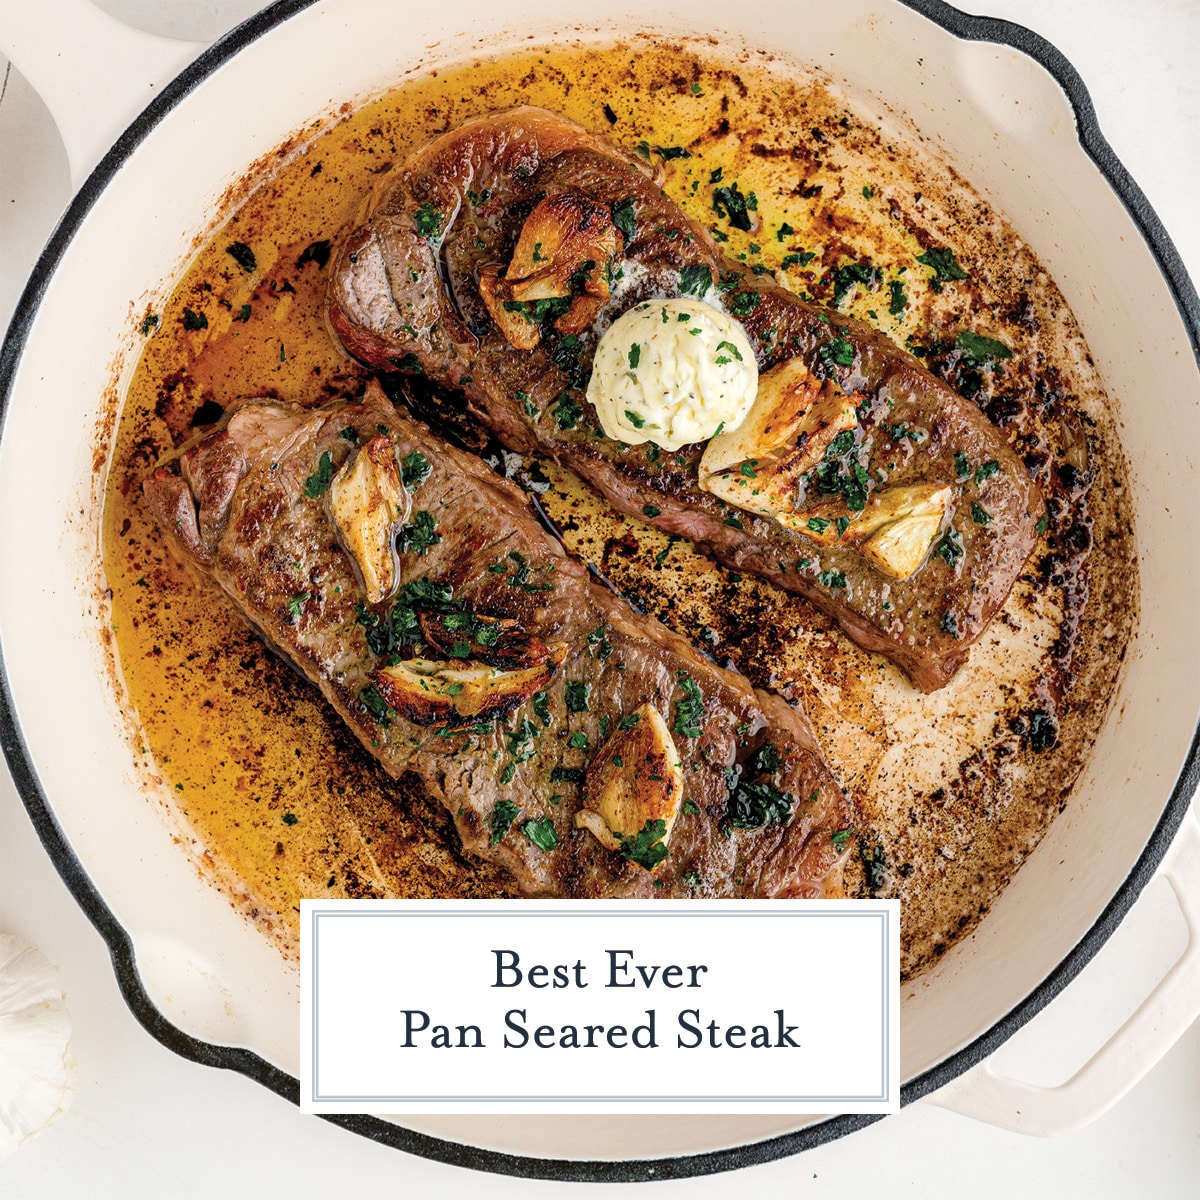 Cast Iron Seared Strip Steak - a flavorful way to make steak!